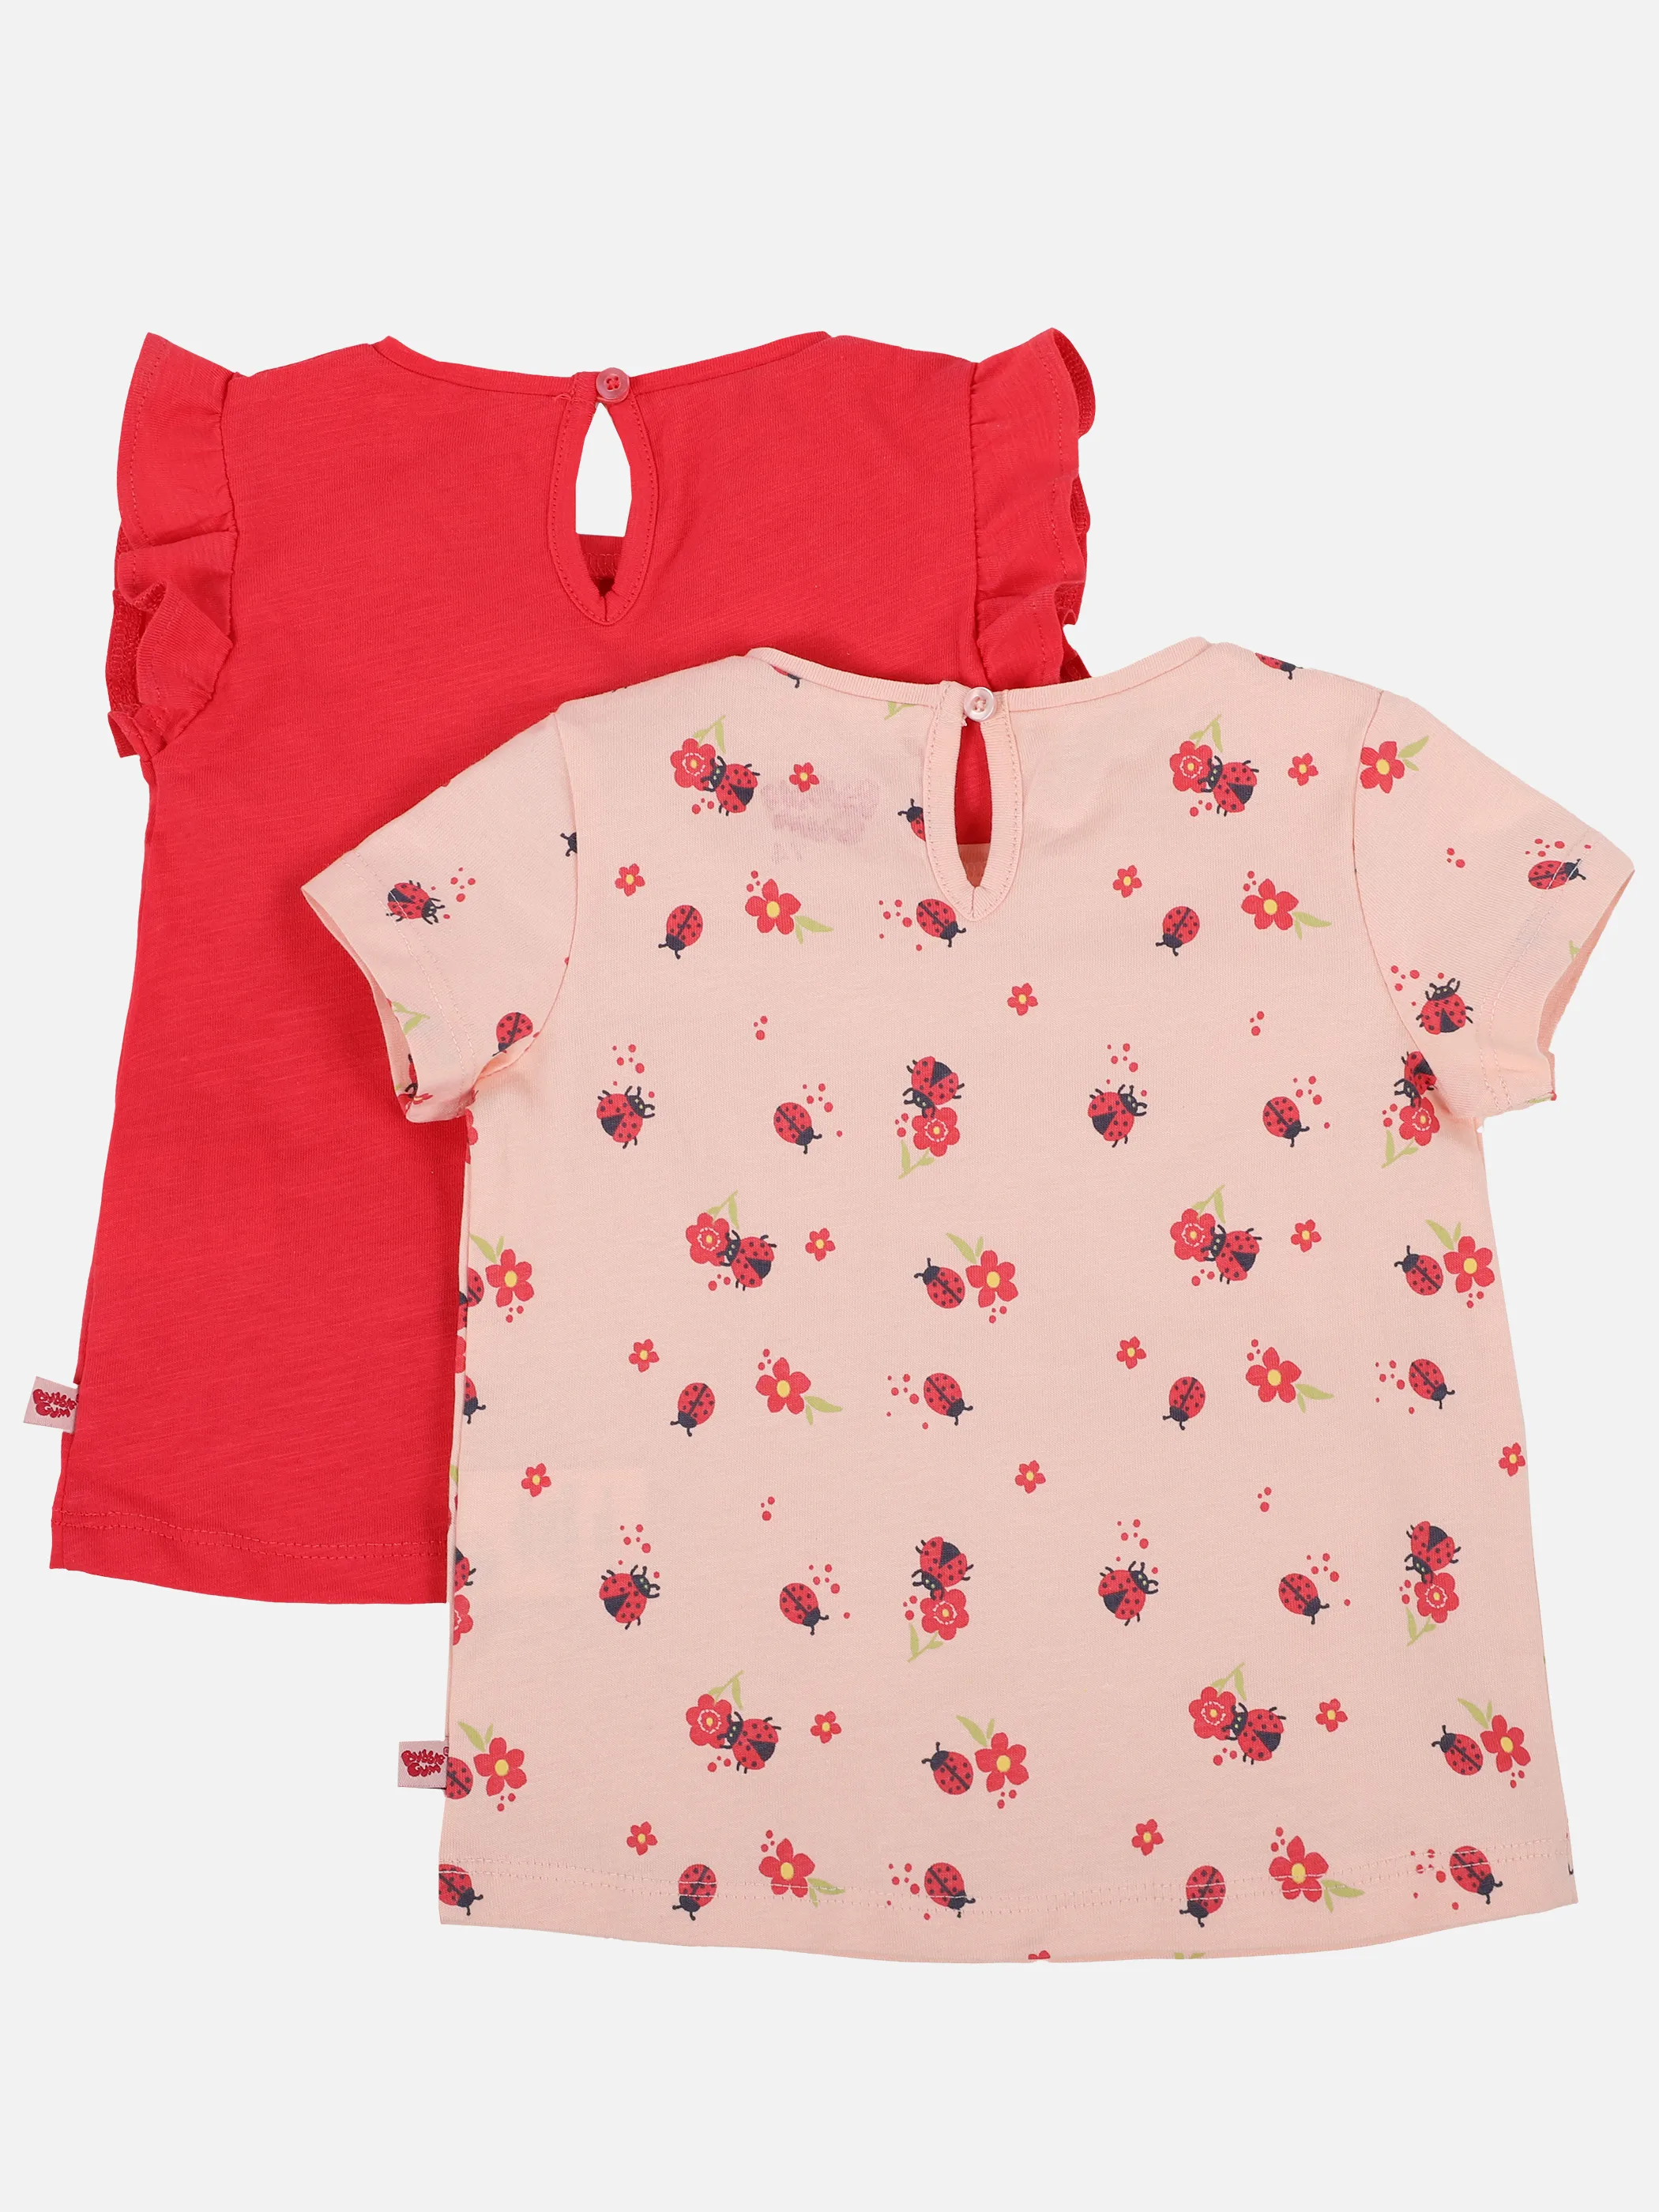 Bubble Gum BM 2er Pack T-Shirts in uni rot und rosa AOP Rosa 892633 ROSA/ROT 2